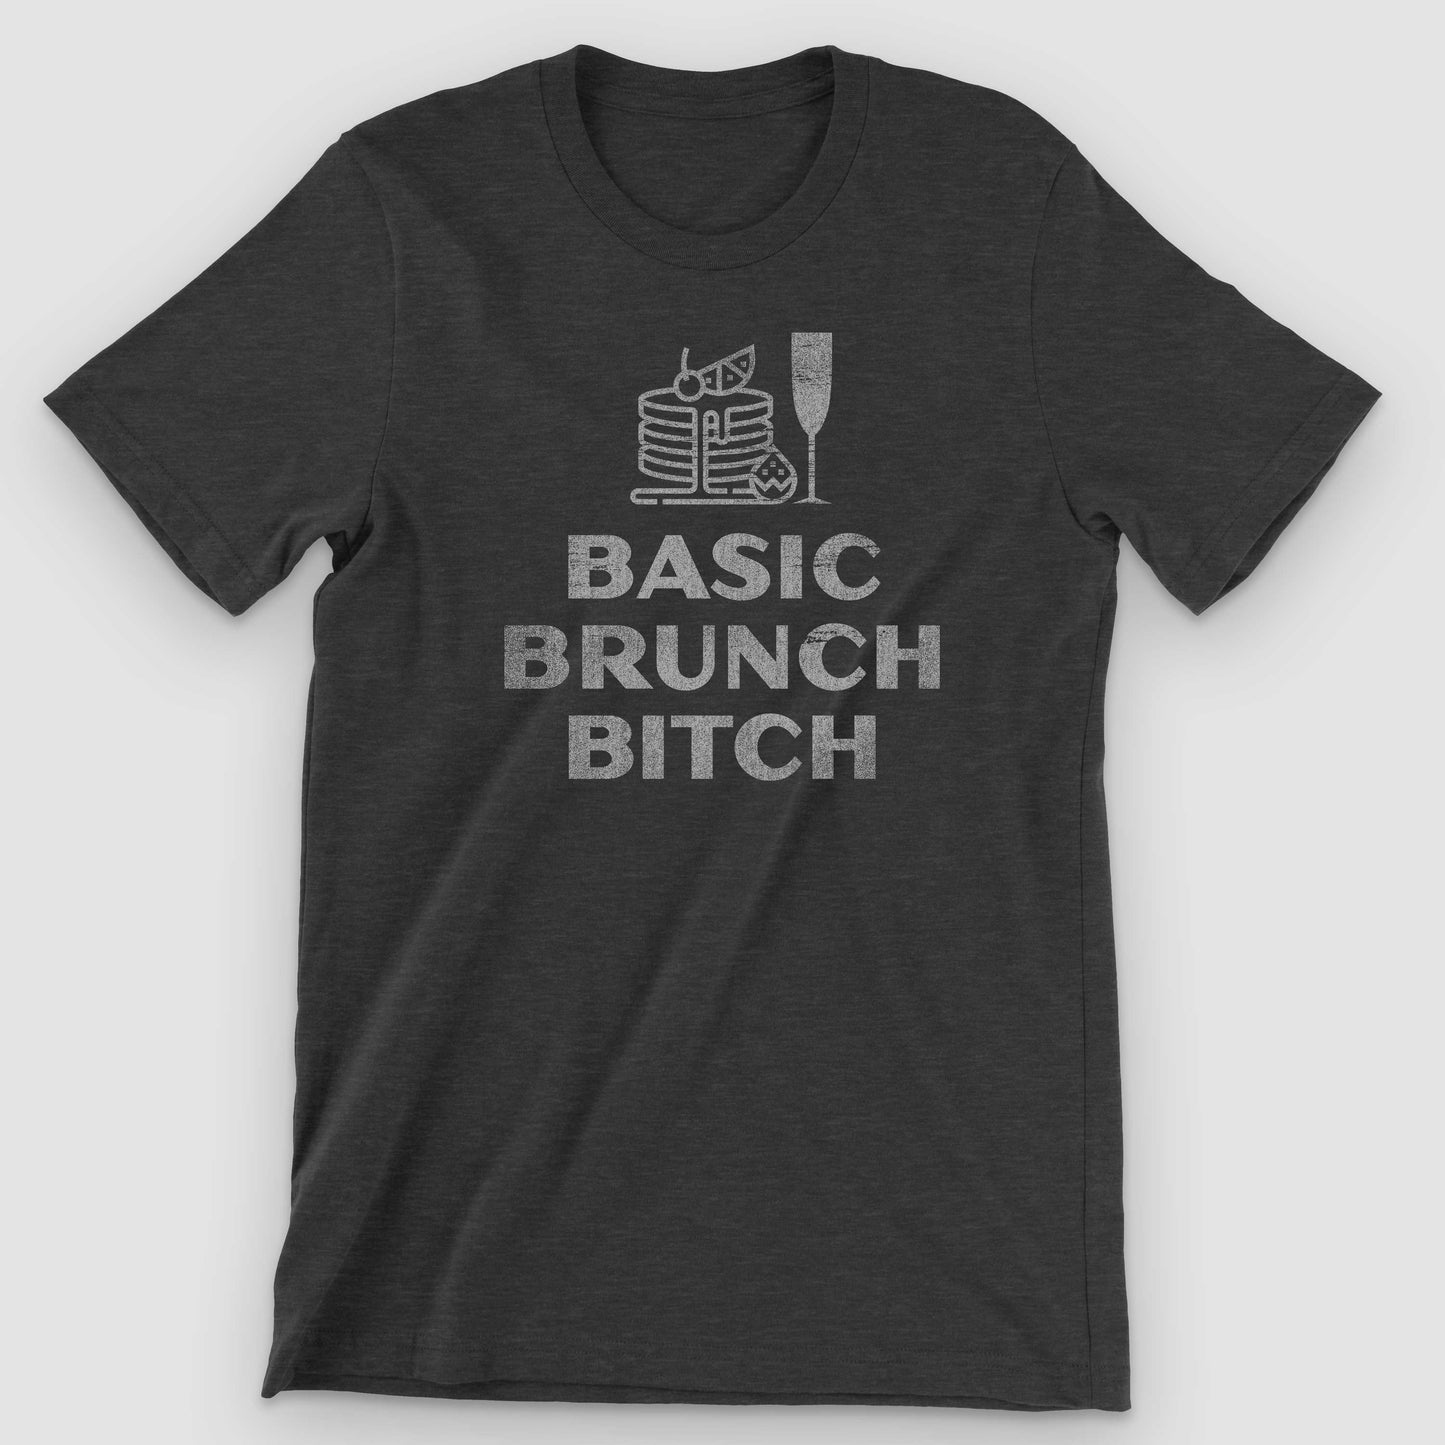 Black Heather Basic Brunch Bitch Graphic T-Shirt by Snaxtime